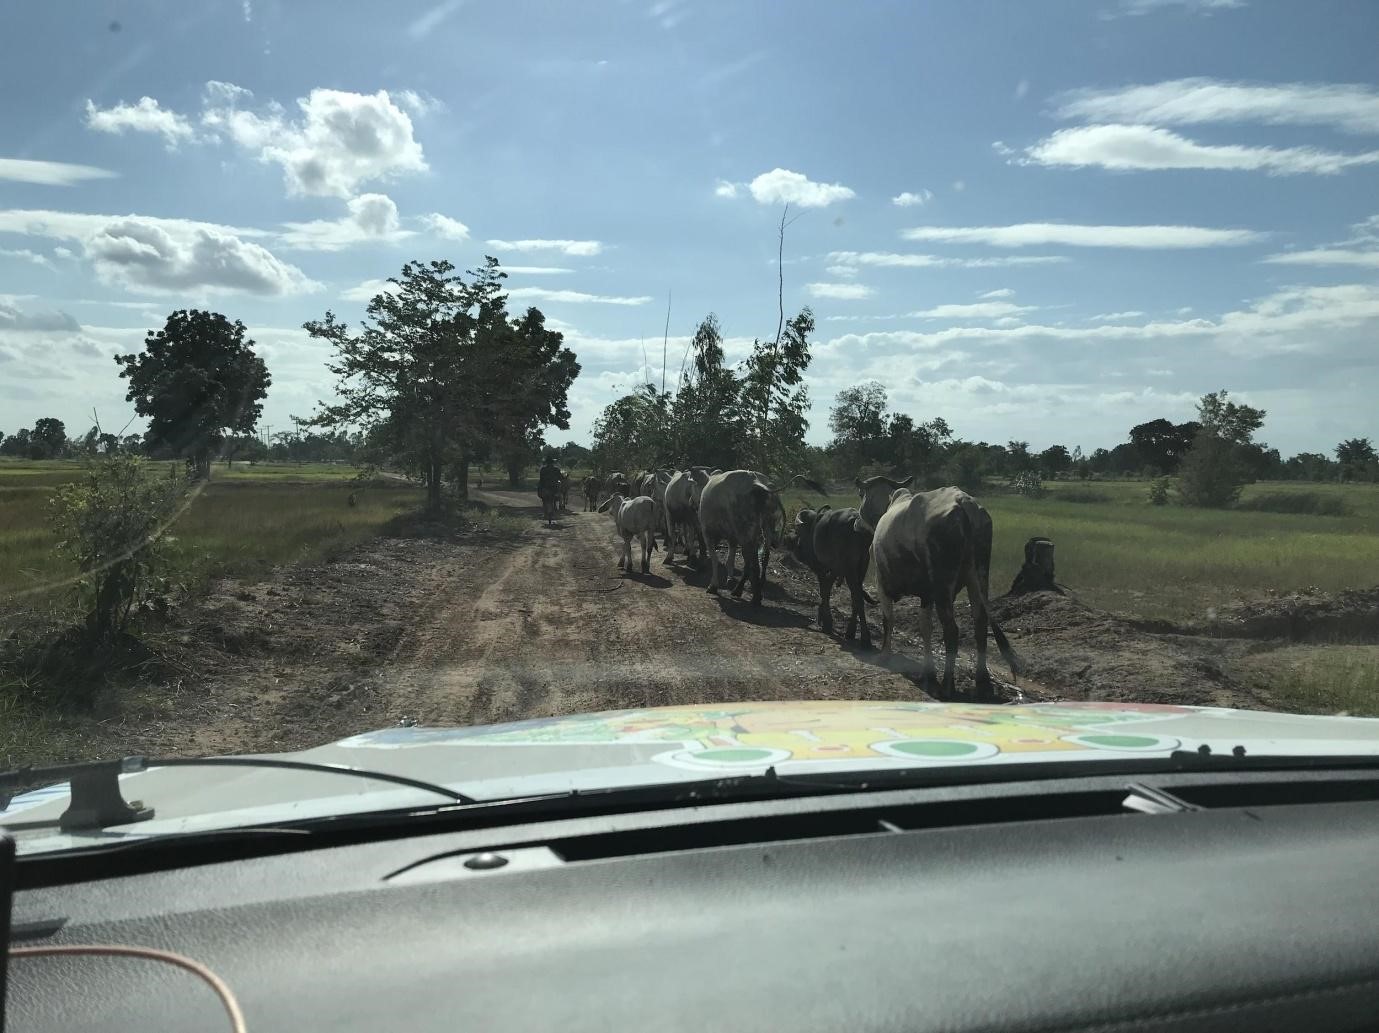 Herds of cattle often appear in the road.